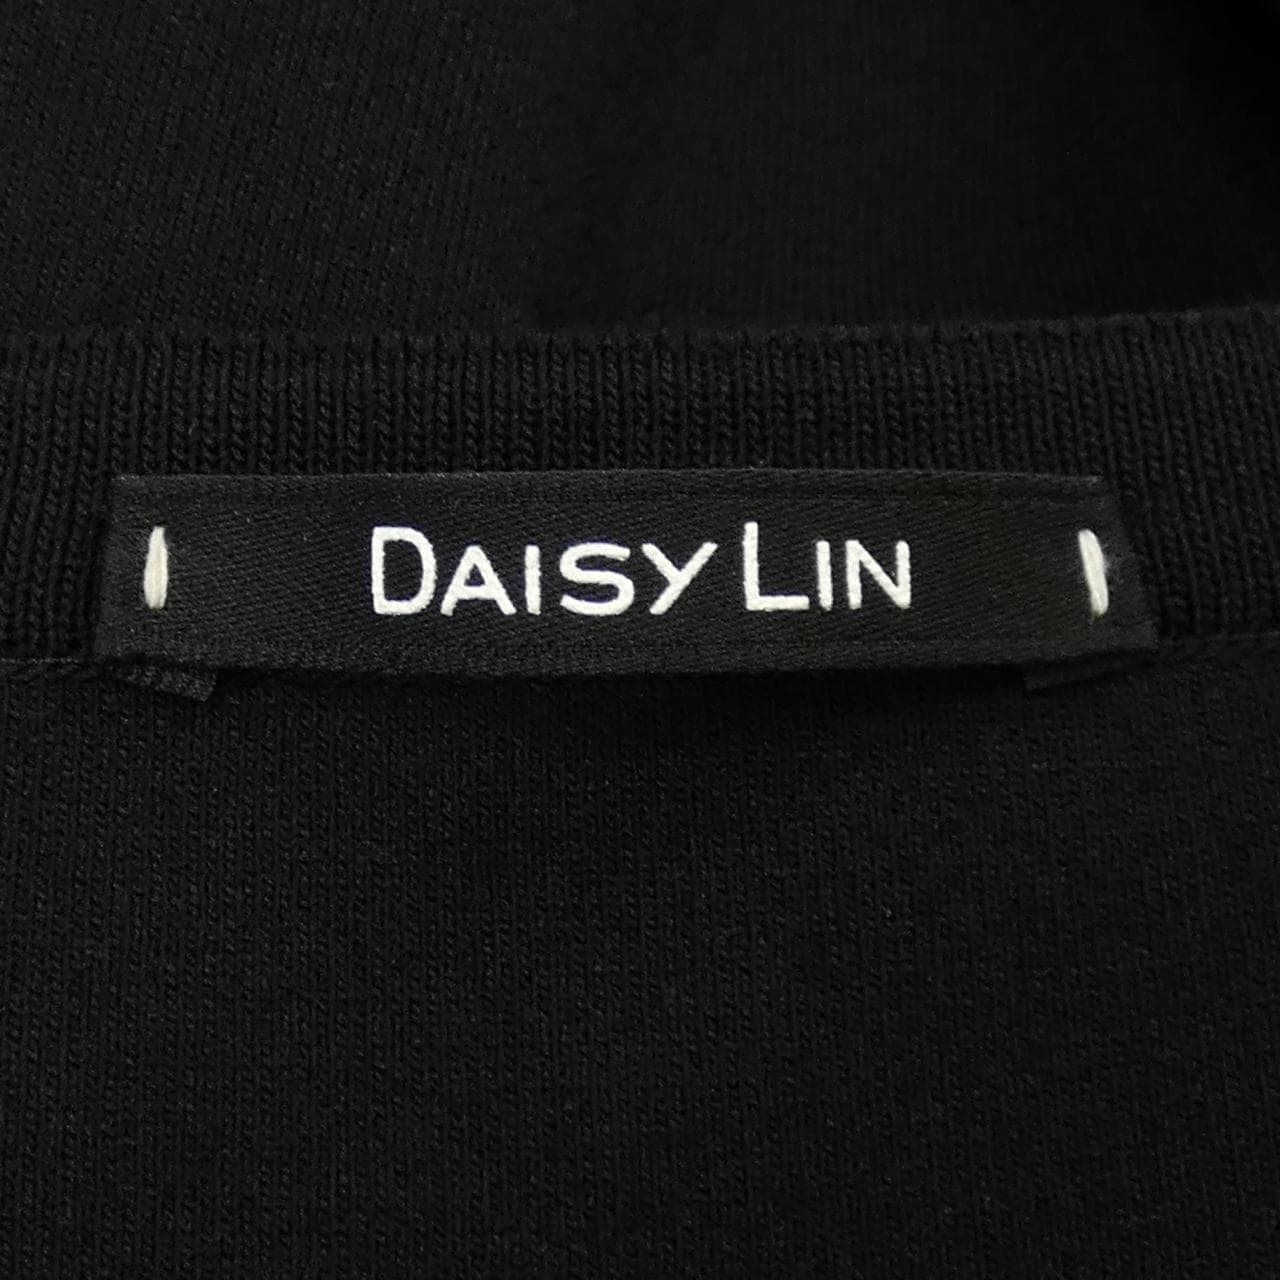 Daisy lin DAISY LIN tops